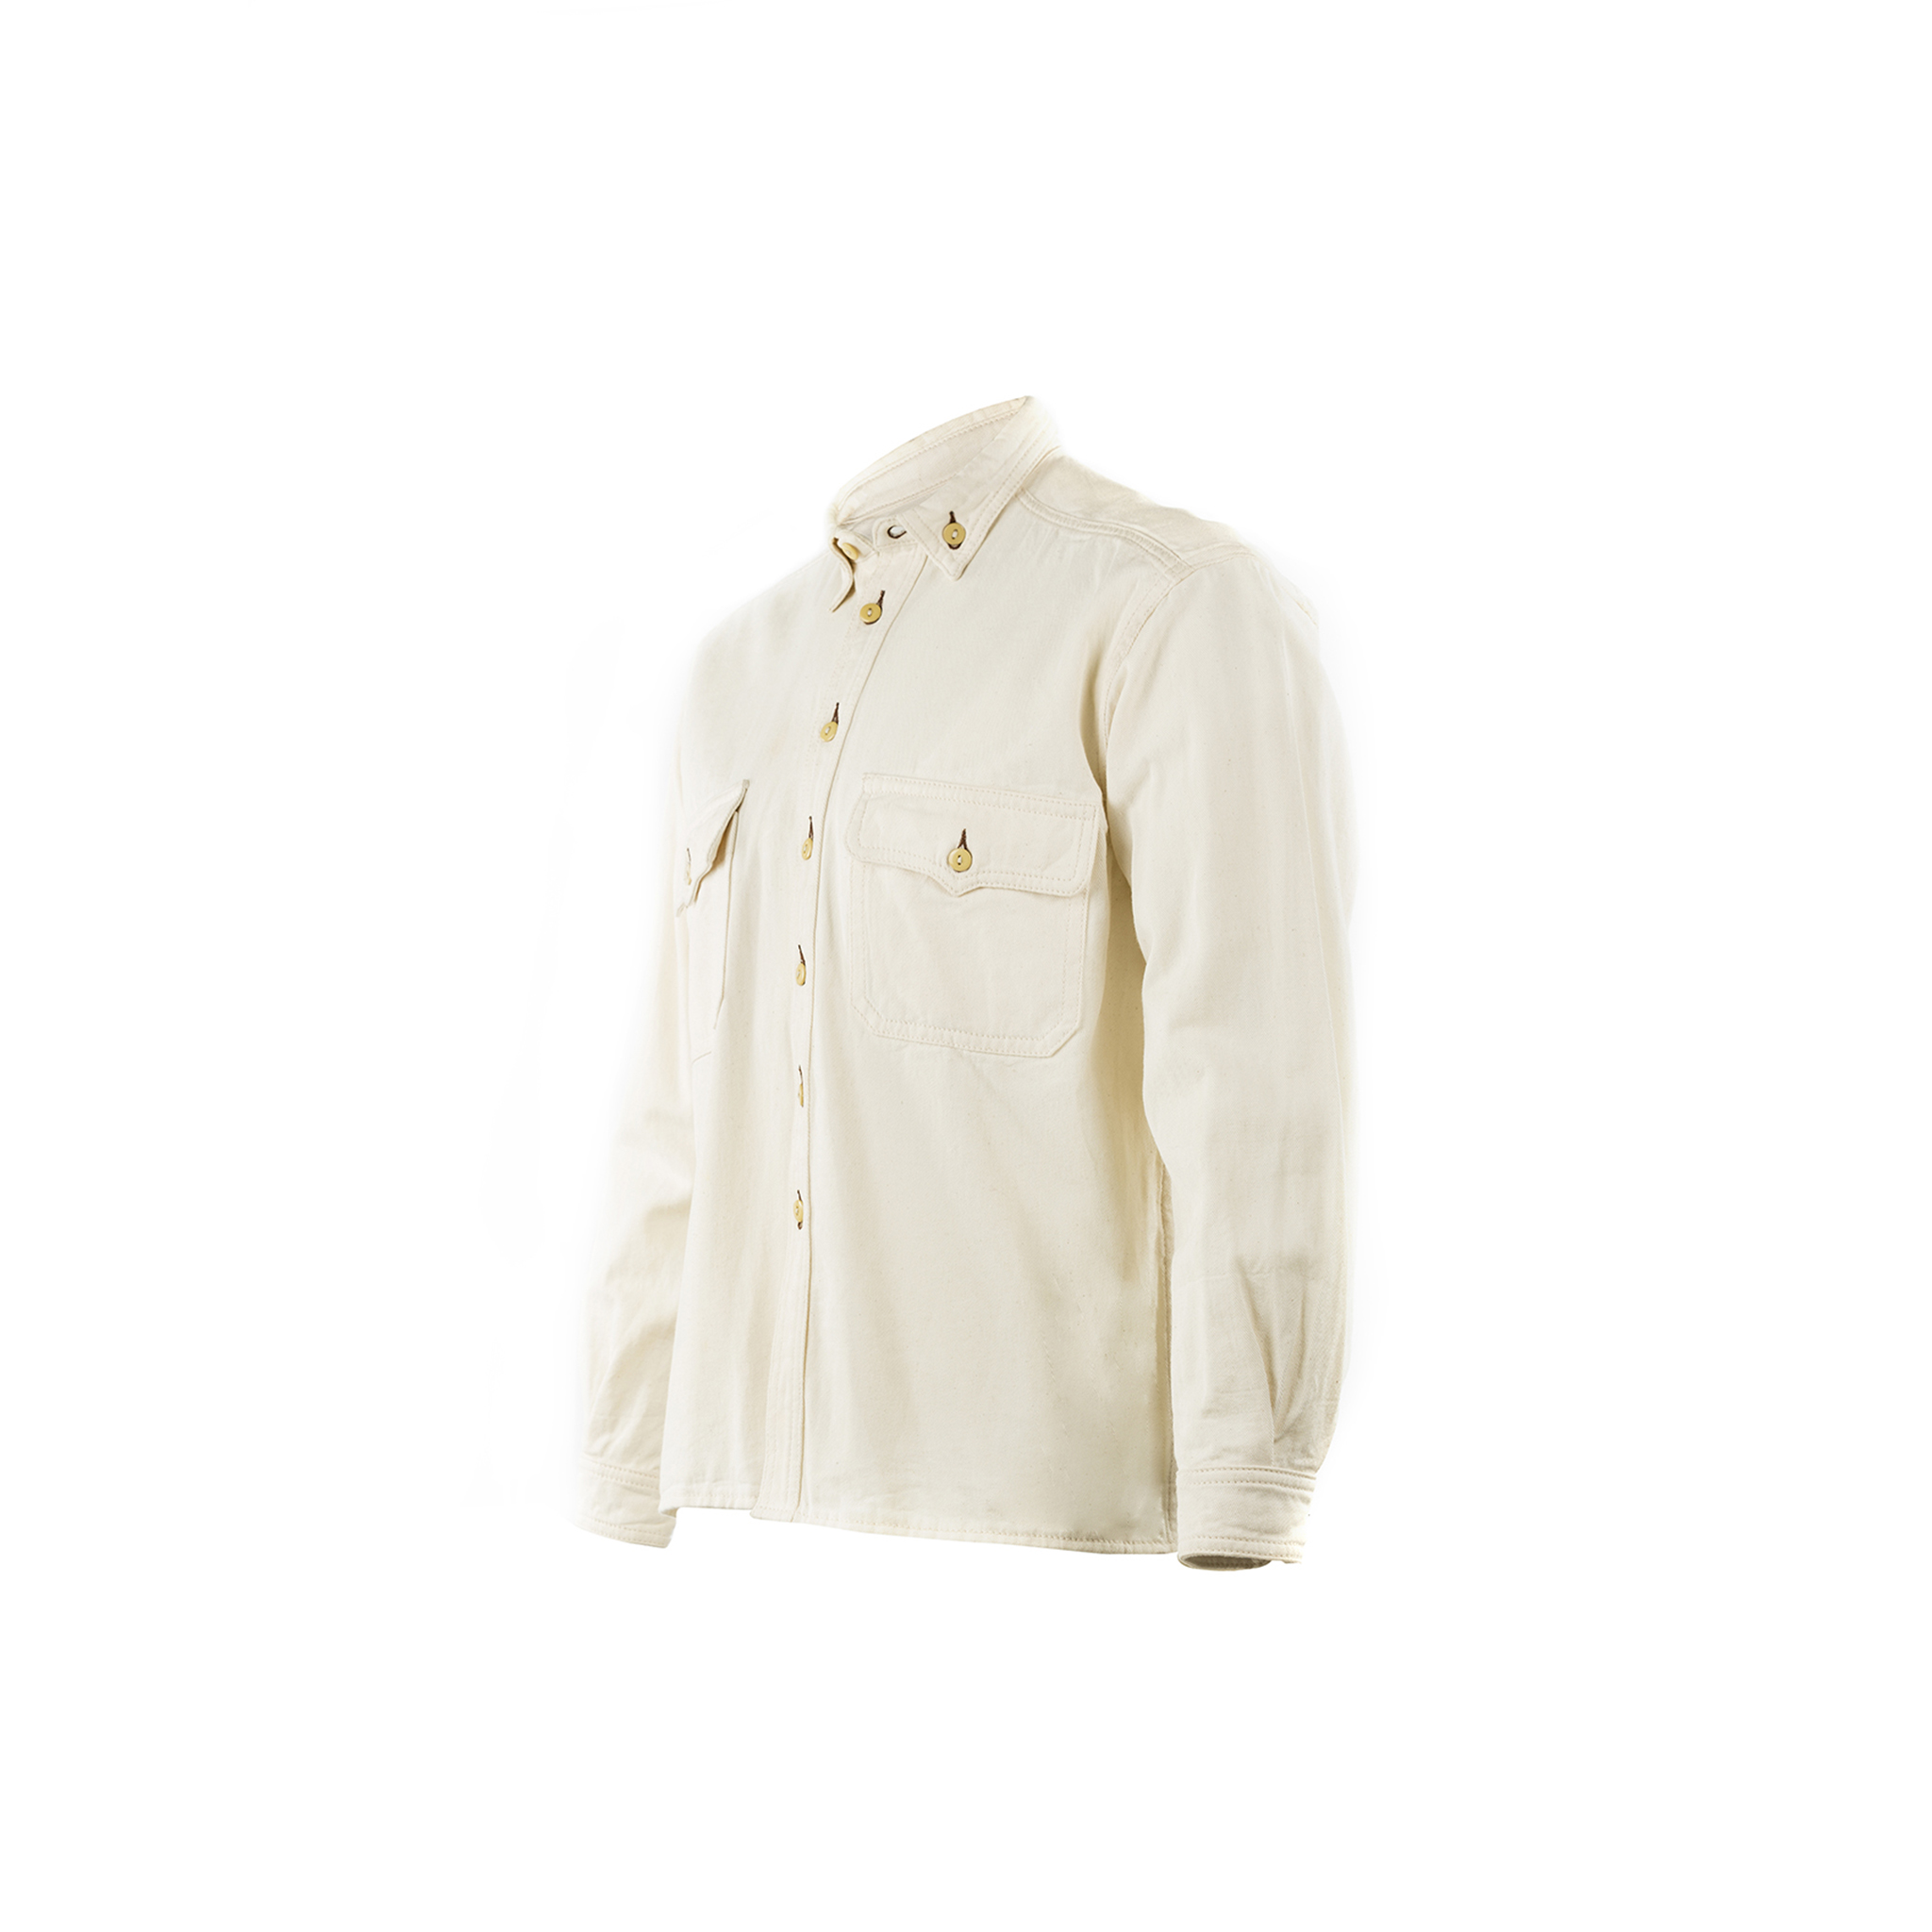 Pilot Shirt - Cotton gabardine - Ecru color